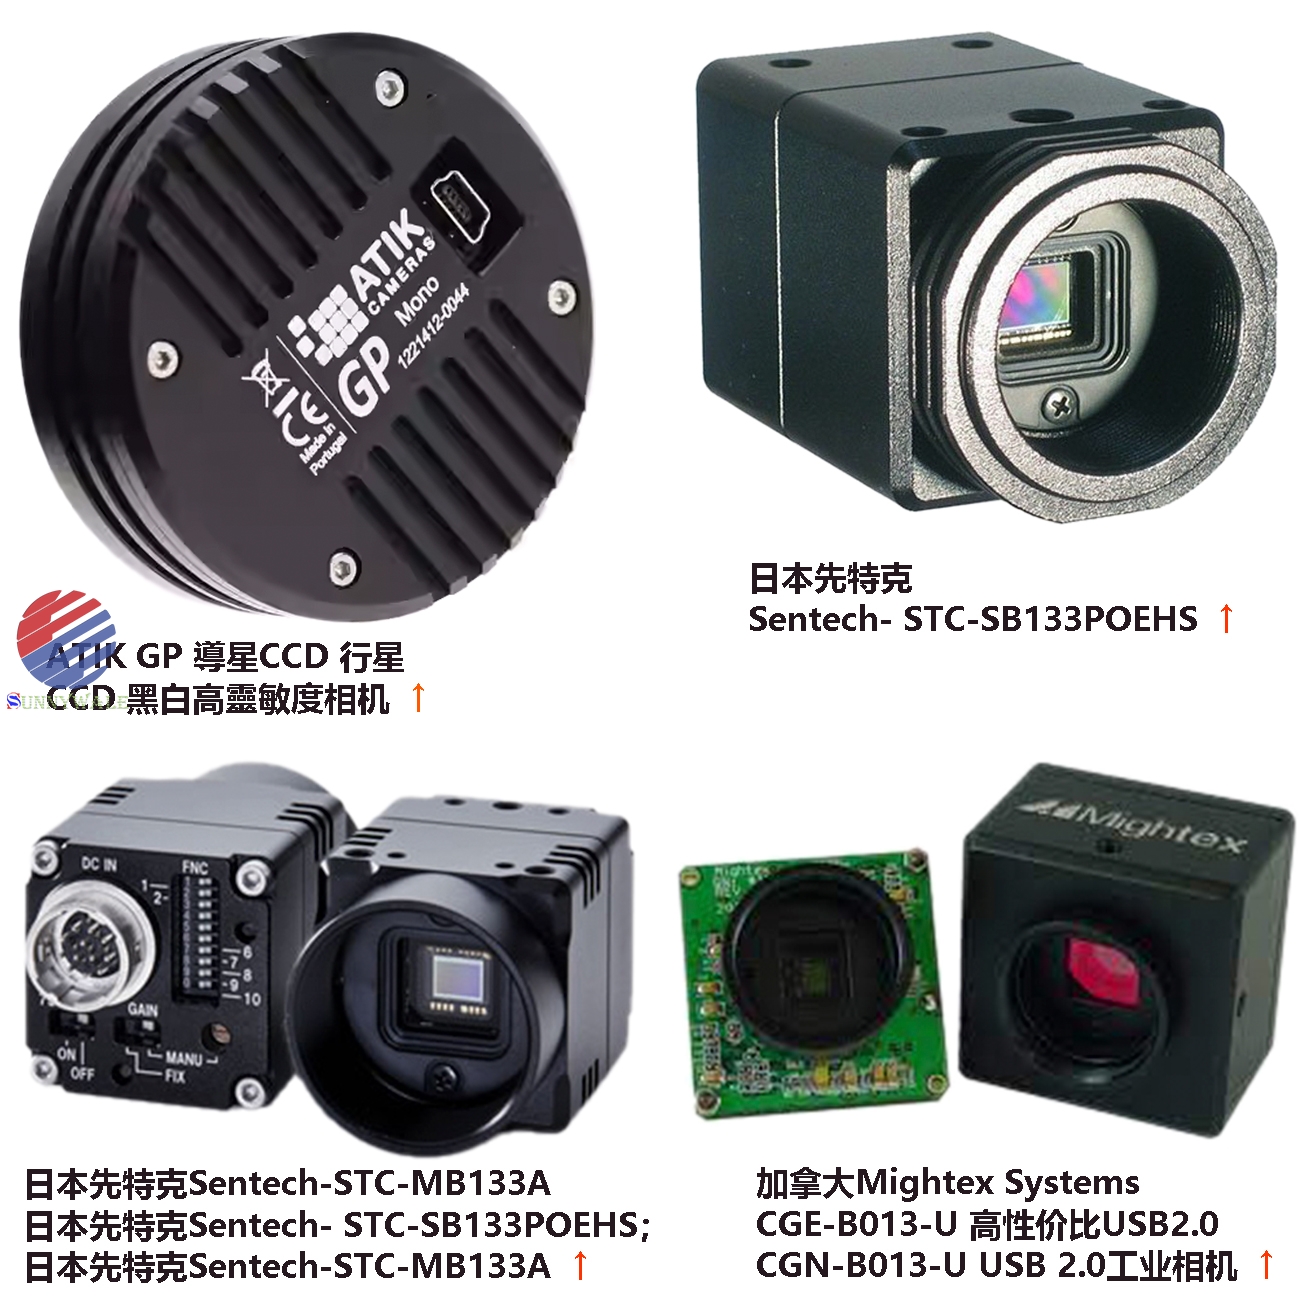 ATIK GP Guide CCD Planetary CCD Black and white high sensitivity Camera; Japan Sentech-STC-MB133USB; JapanSentech-STC-SB133POEHS;  JapanSENTECh-STC-SB133POEhs; Japan Sentech-STC-MB133A; Canada Mightex Systems CGE-B013-U cost-effective USB2.0 industrial camera; Canada Mightex Systems CGN-B013-U USB 2.0 industrial camera